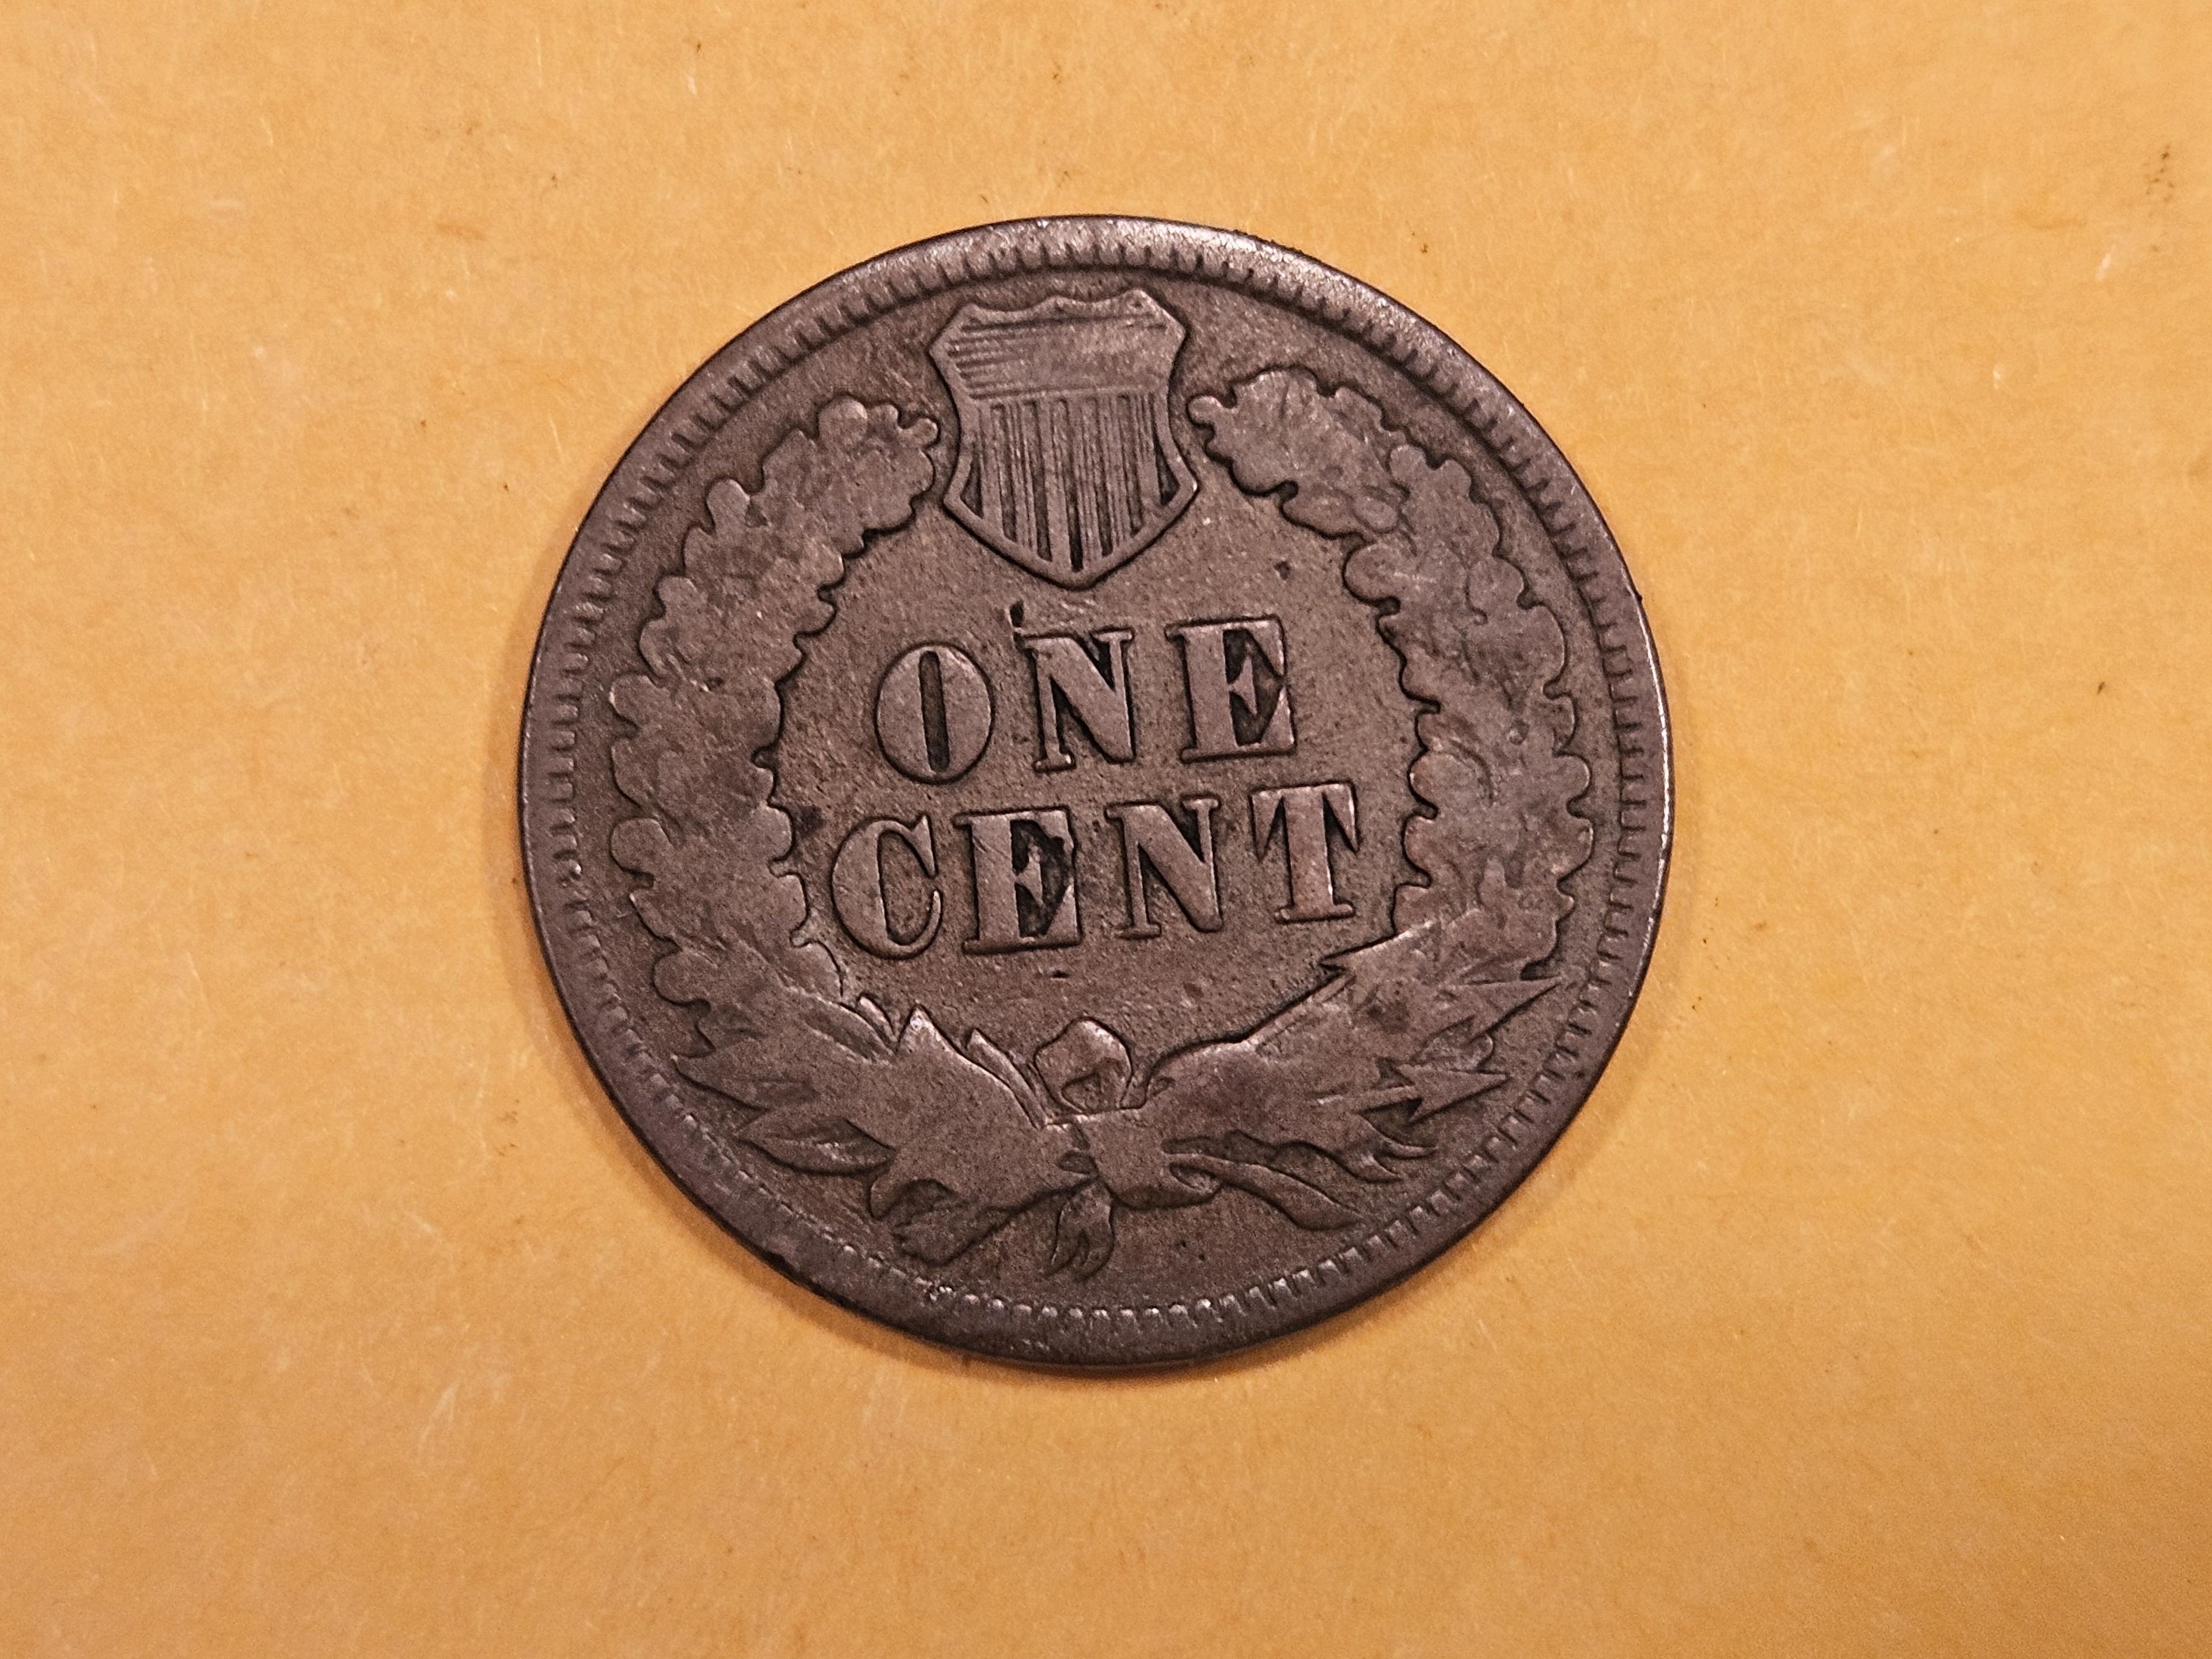 * Semi-Key 1871 Indian Cent